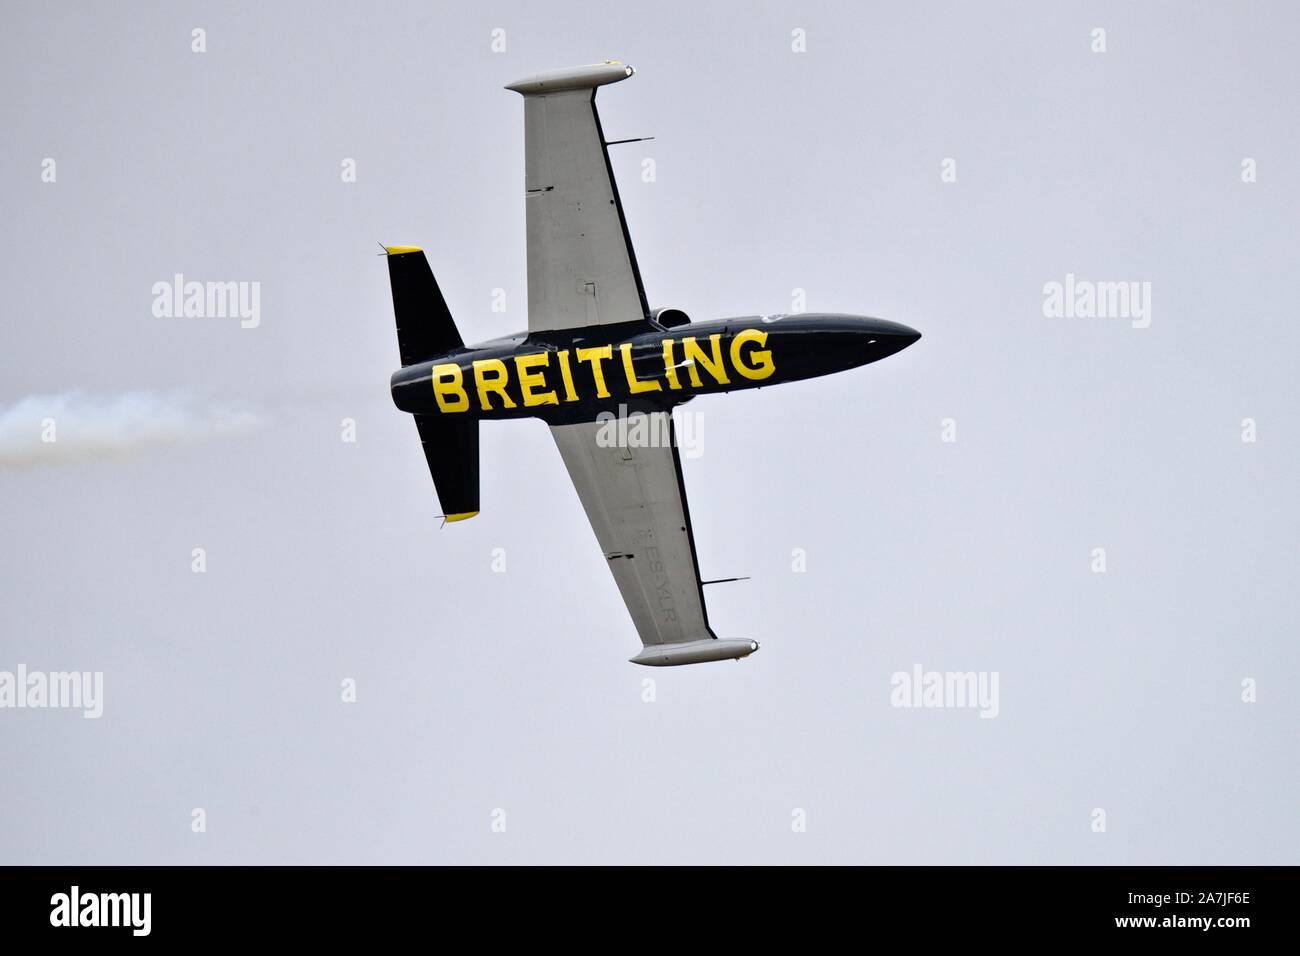 Breitling Jet Team - Czech Aero L-39 Albatros jetperforming at the Royal International Air Tattoo 2019 Stock Photo